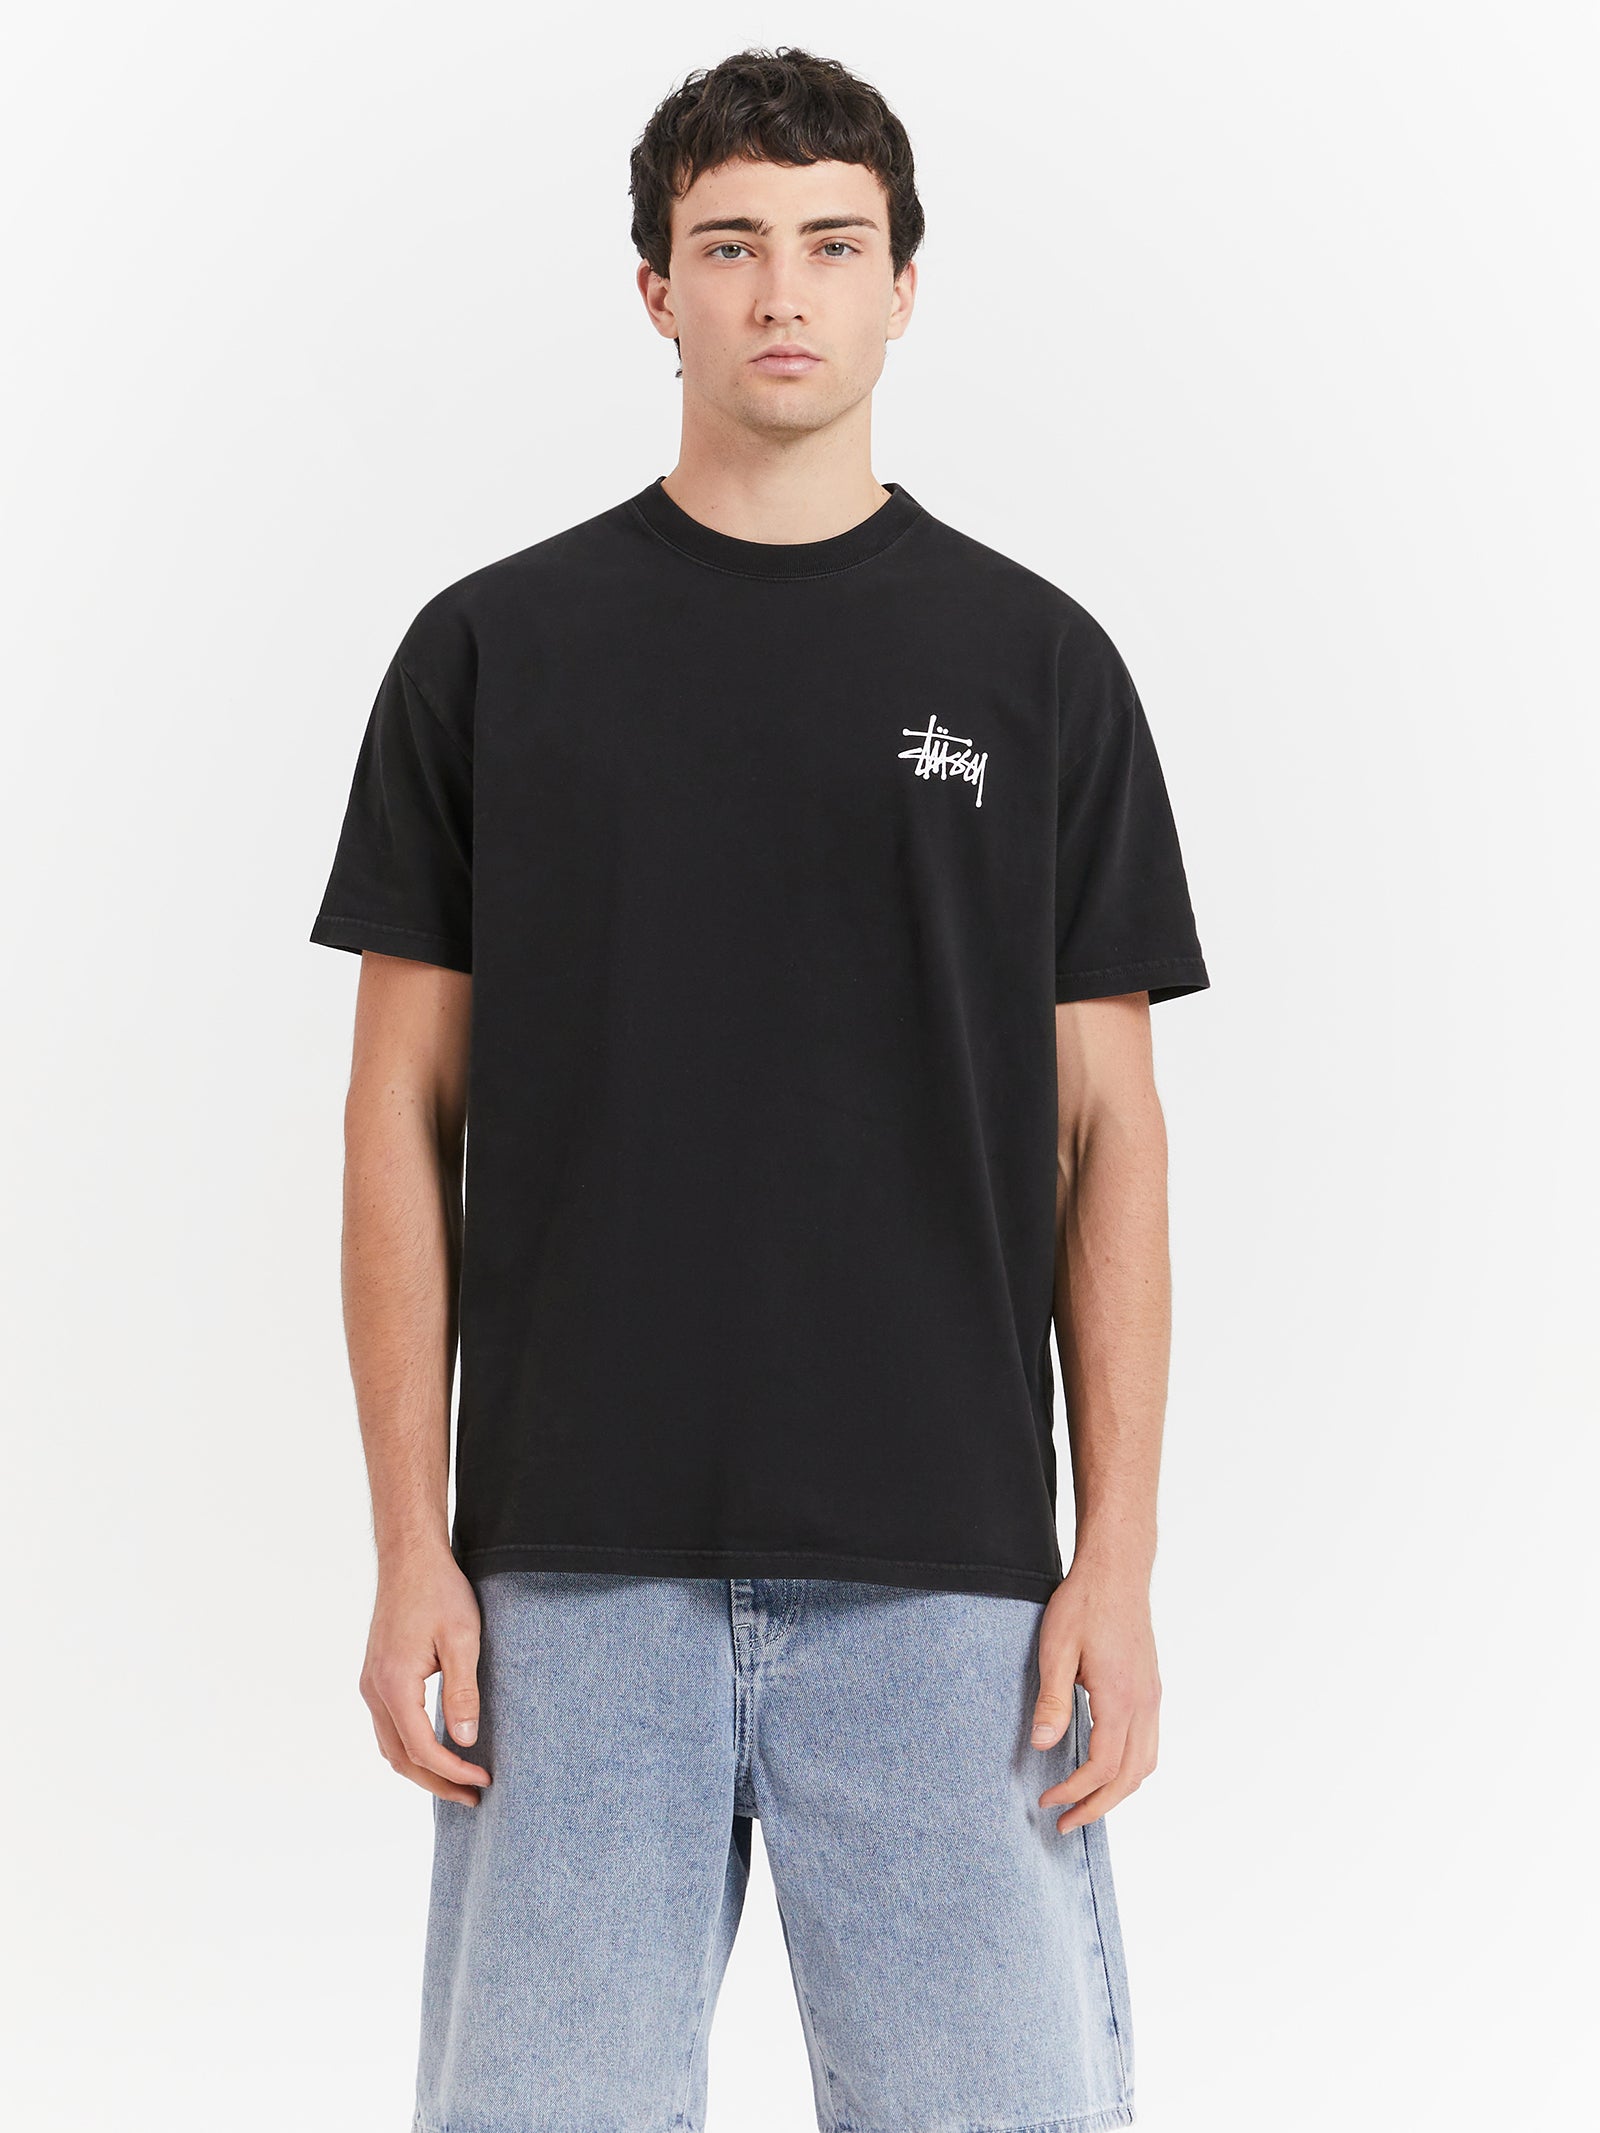 Dionysos Heavyweight T-Shirt in Pigment Black - Glue Store